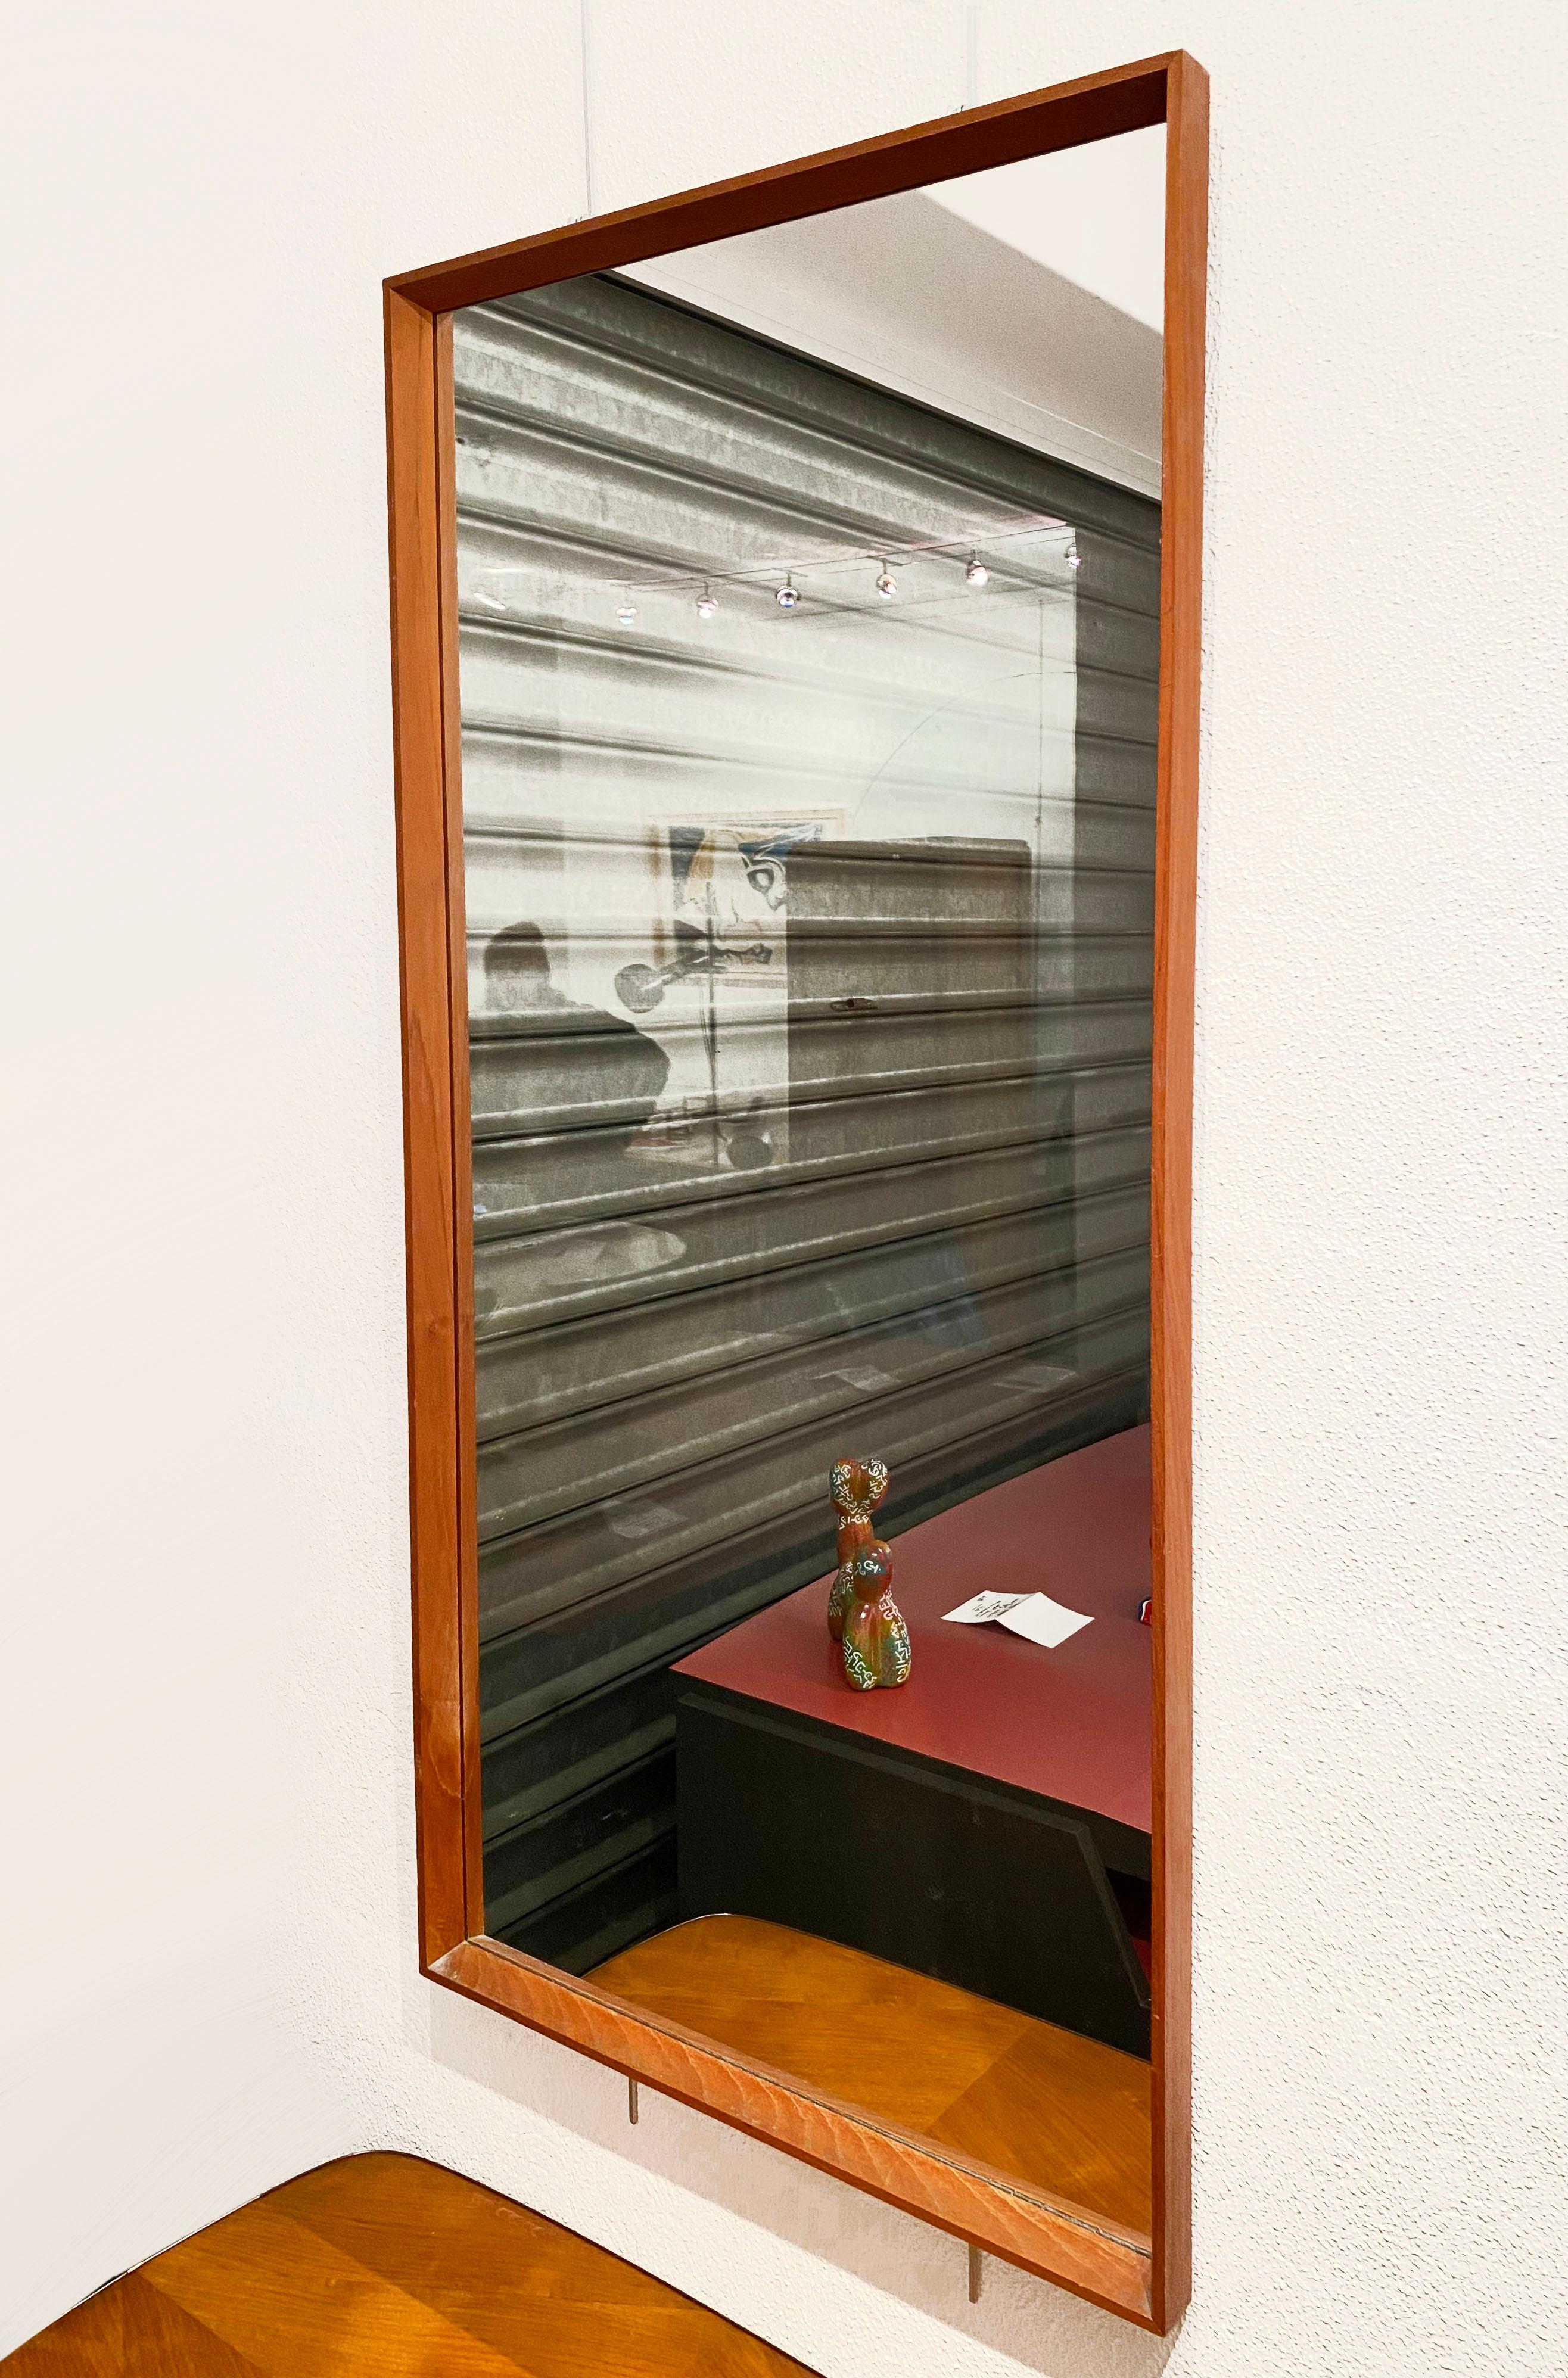 Mirror - North American, circa 1975.
Rosewood

Measures: L 59 x H 122 x W 3.5 cm.